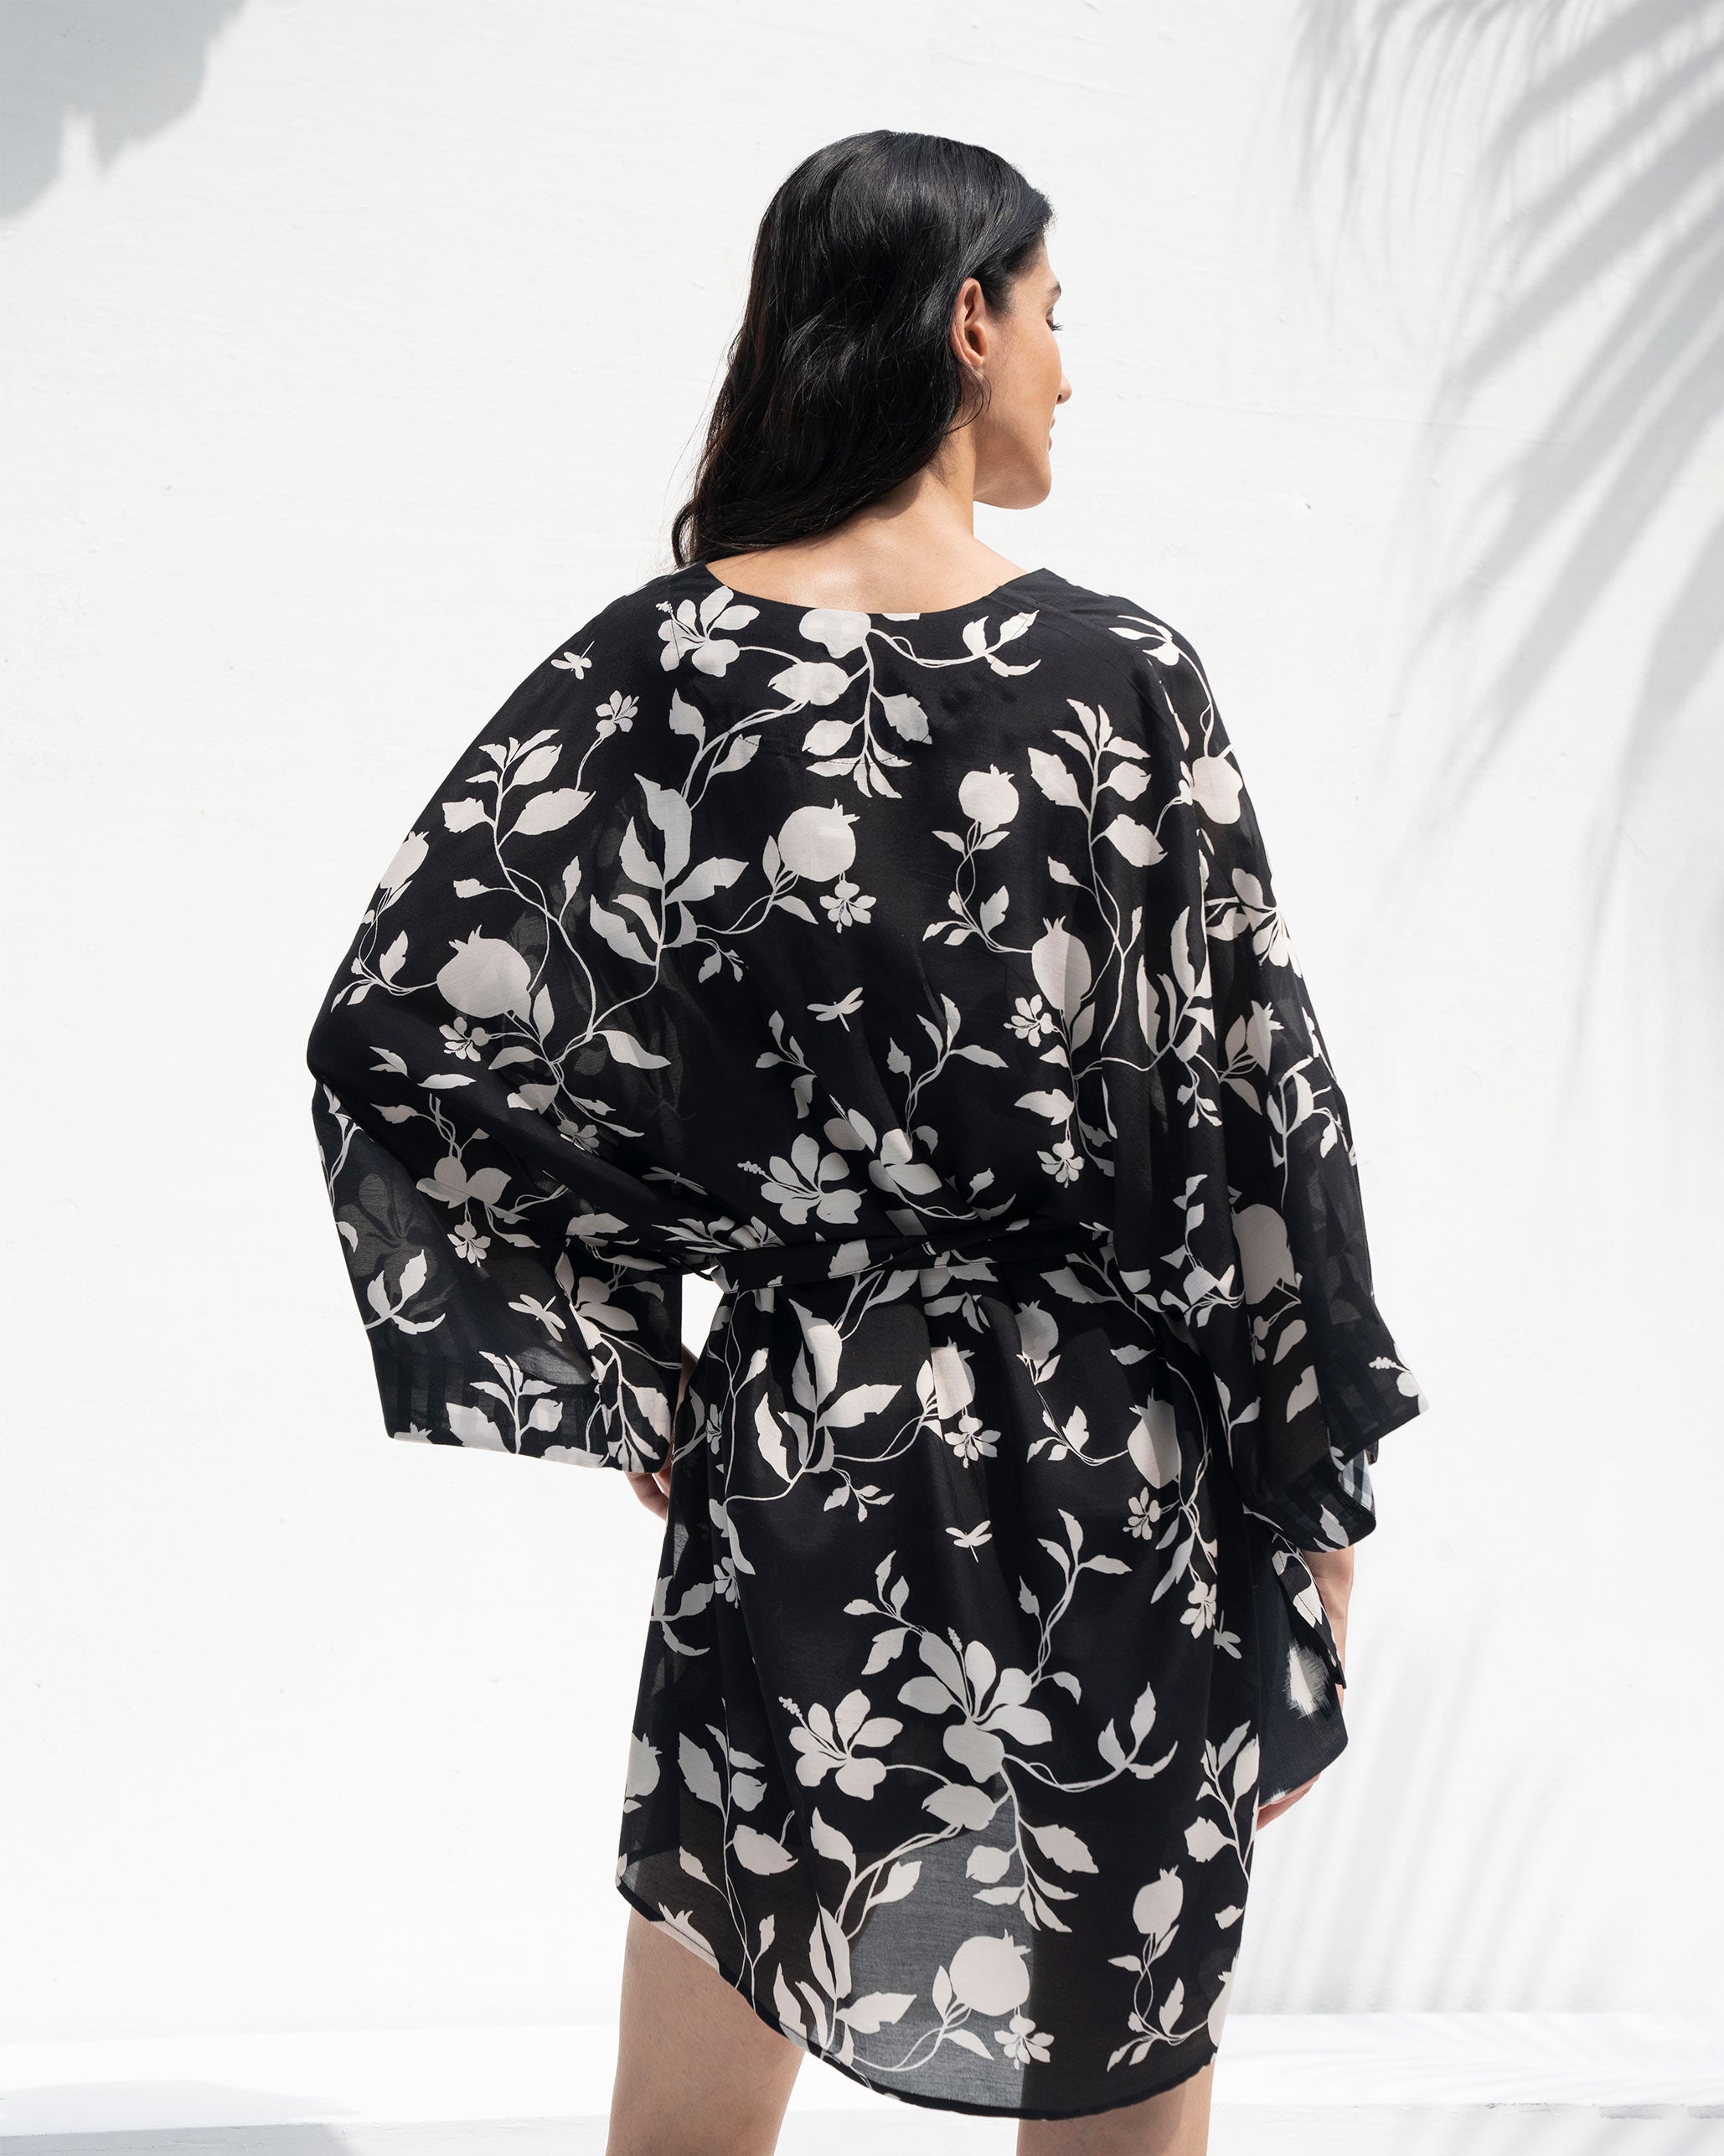 Celeste Kimono - Ivory & Black